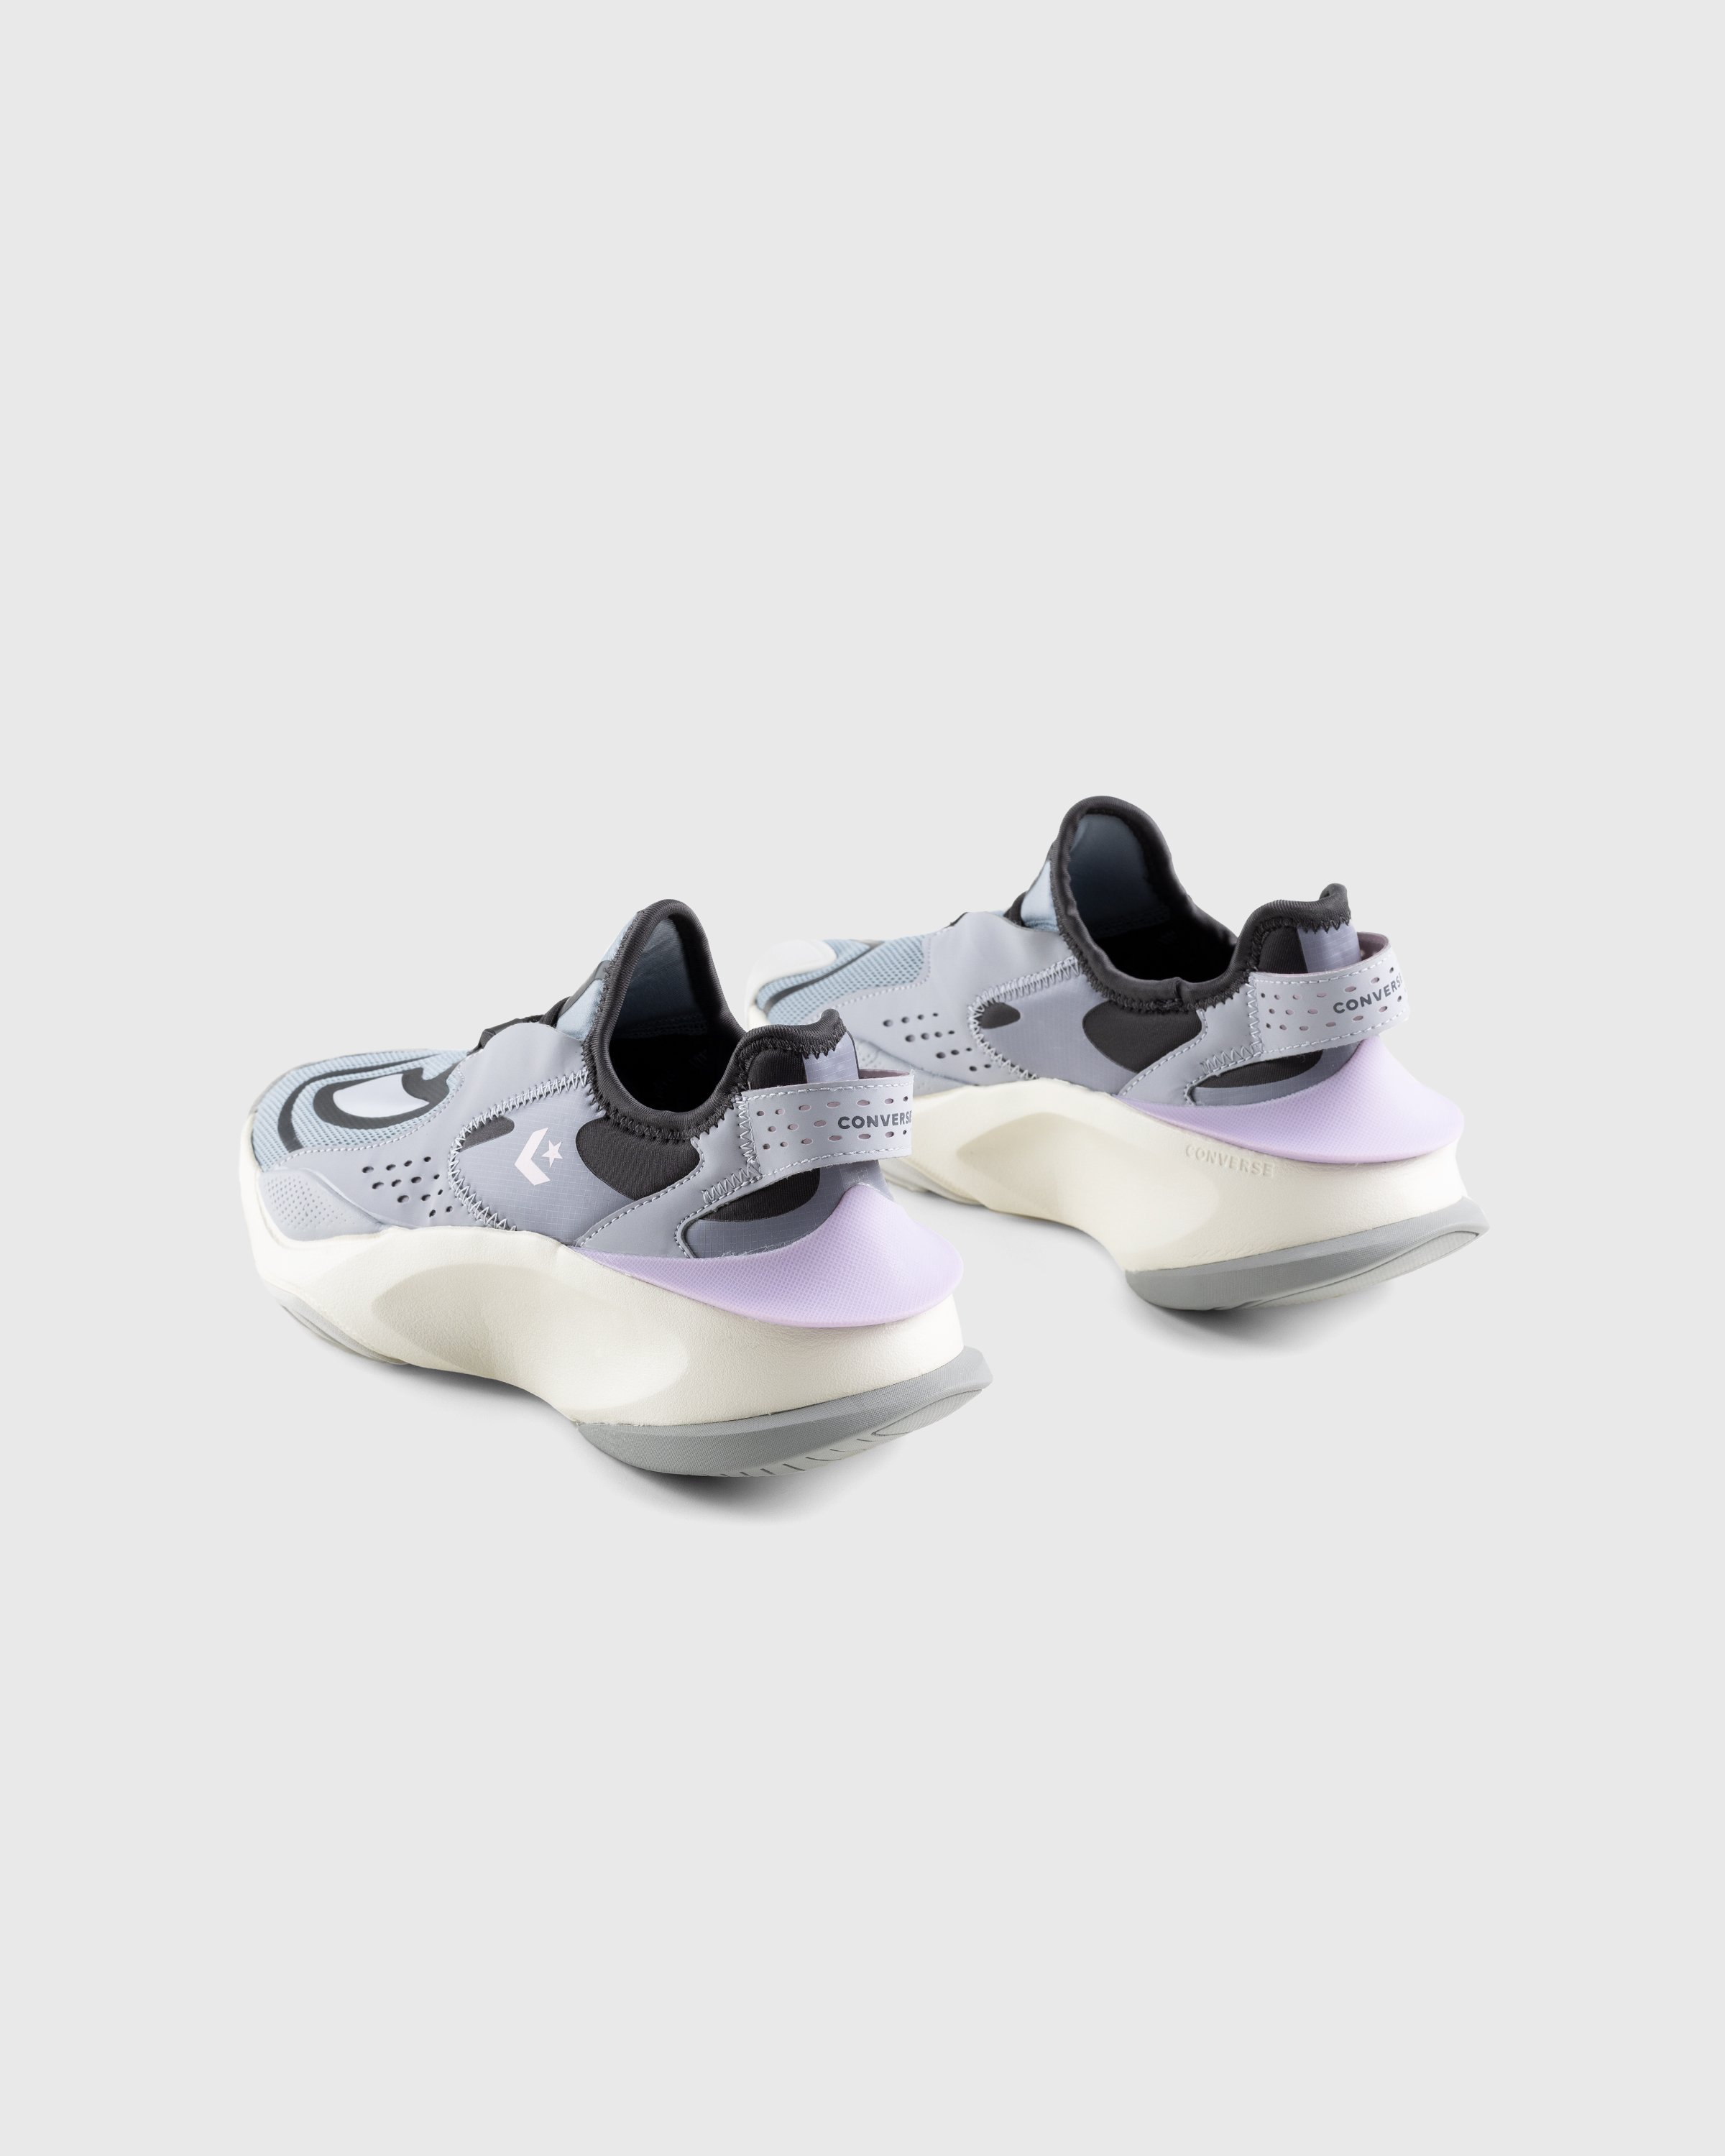 Converse - Aeon Active Cx Ox Obsidian Mist - Footwear - Grey - Image 4